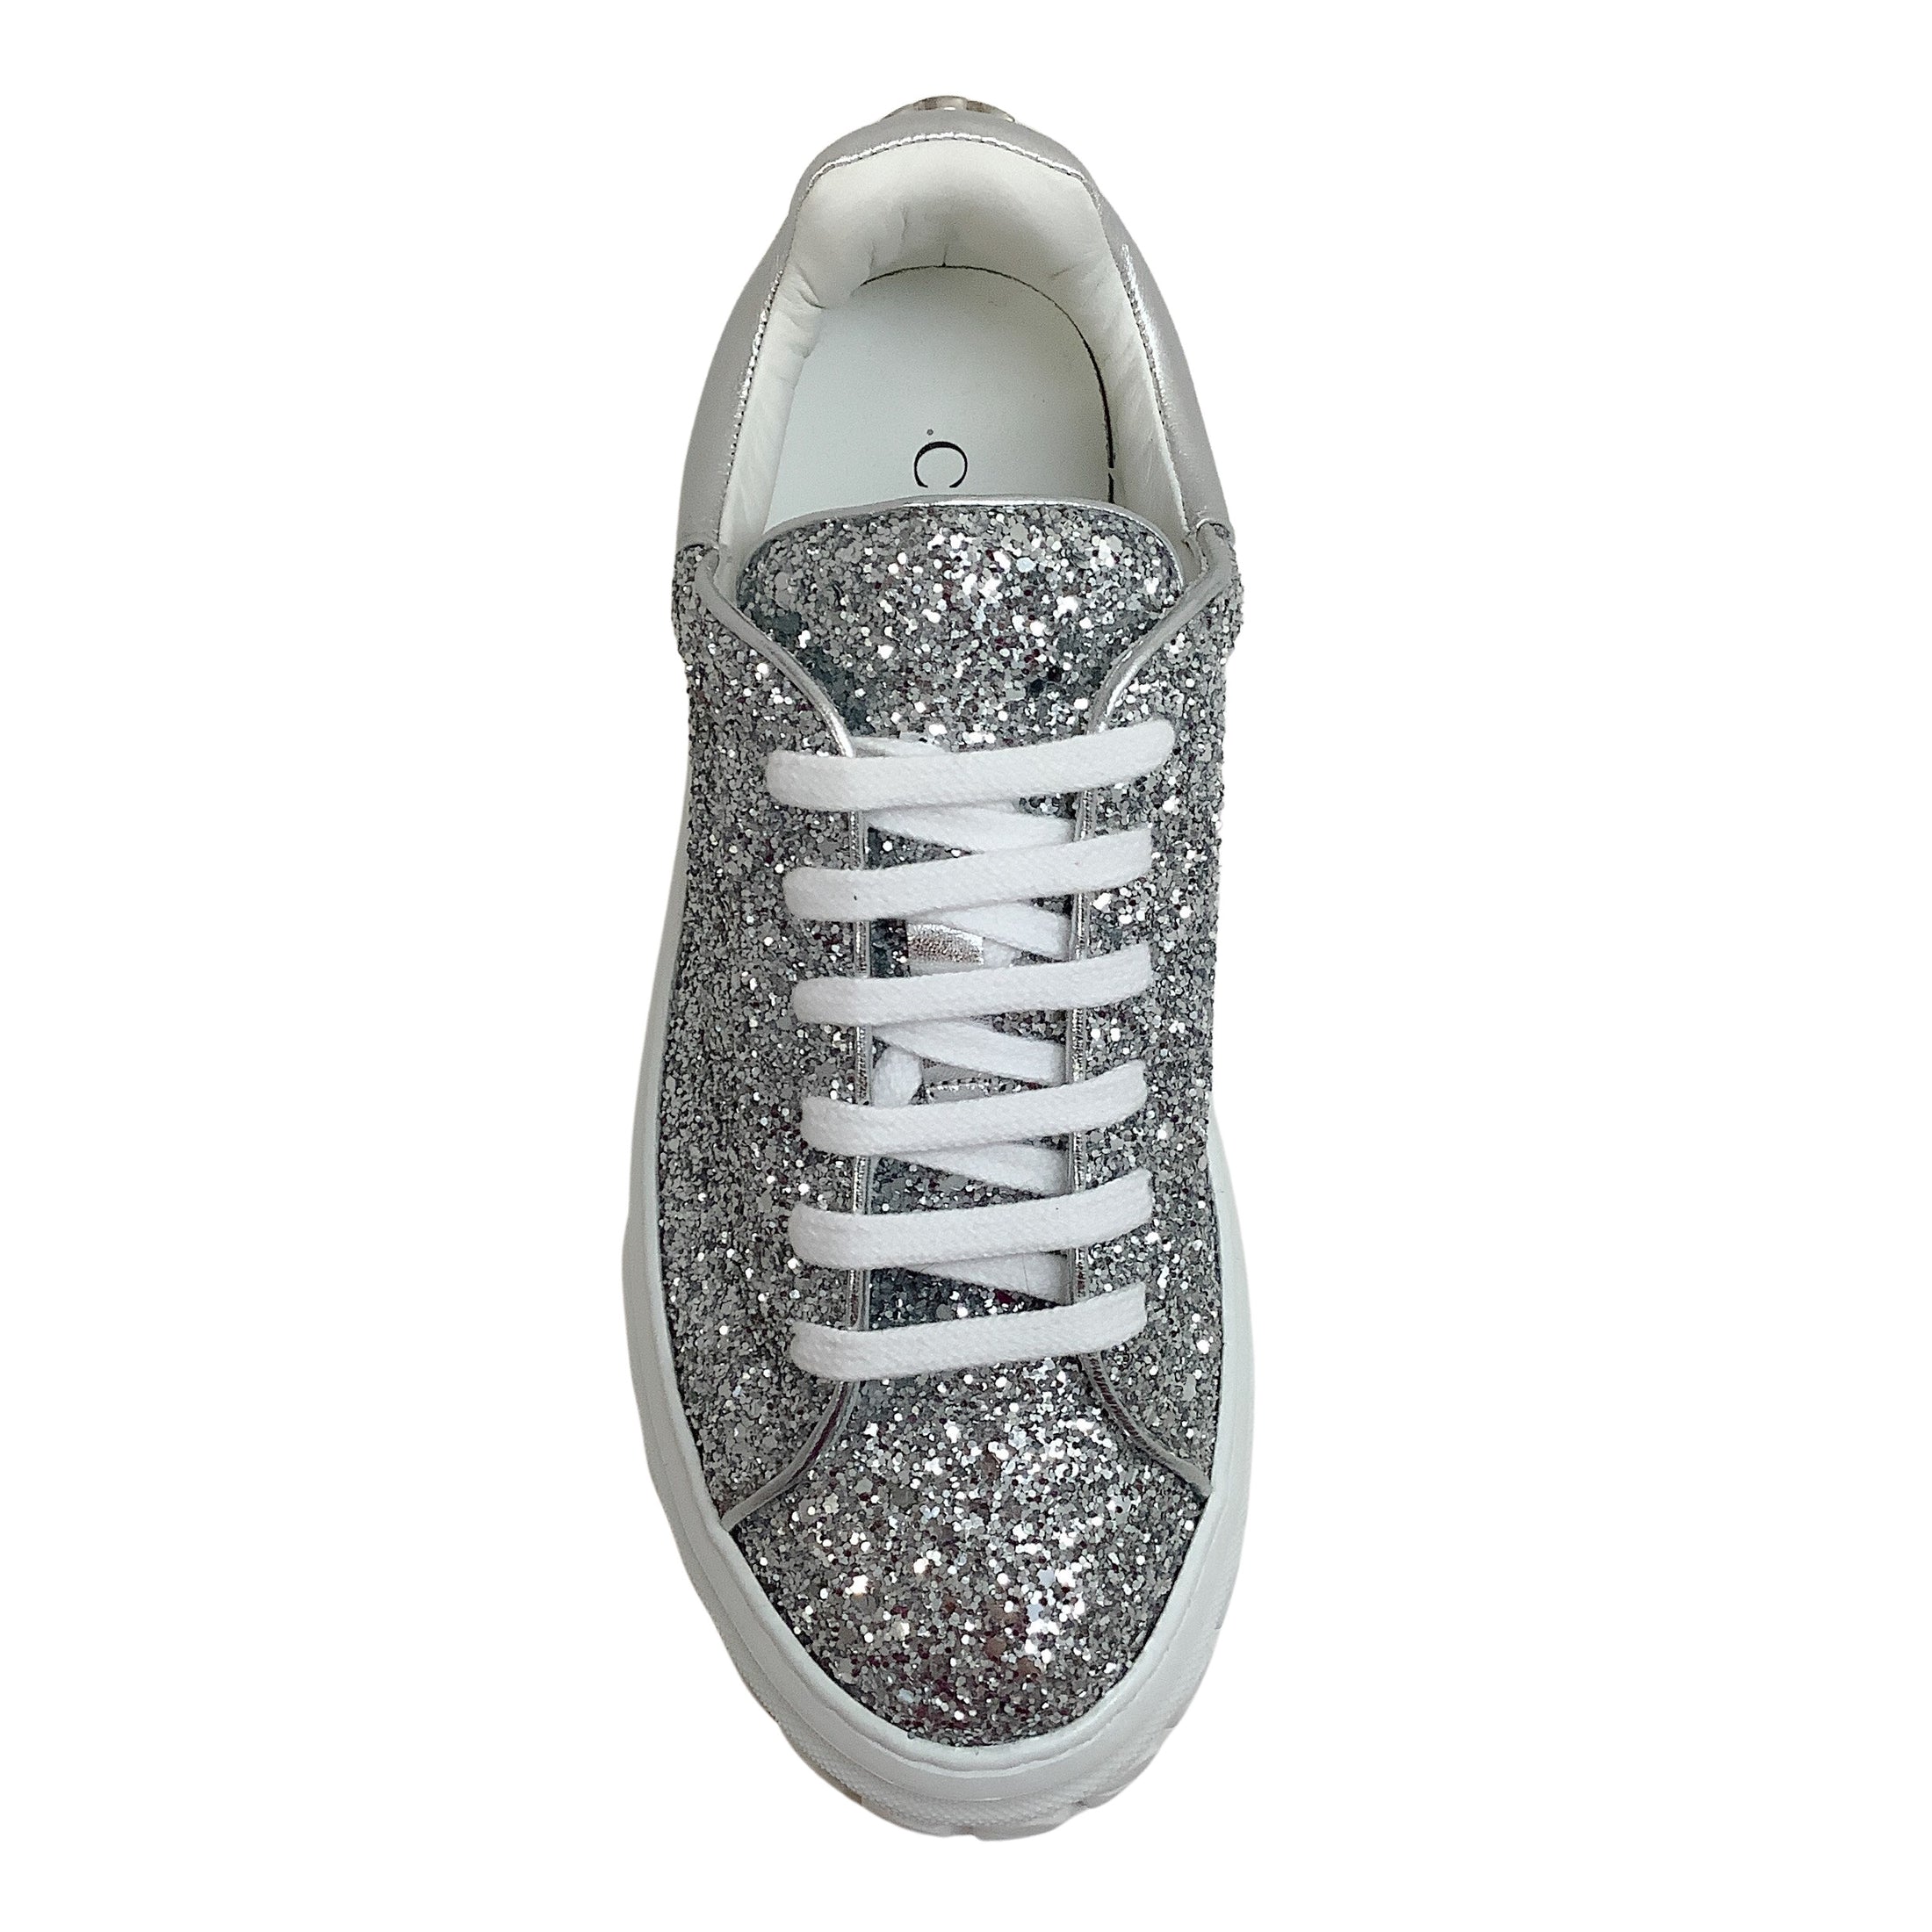 Casadei Silver Glitter Off Road Stargate Sneakers